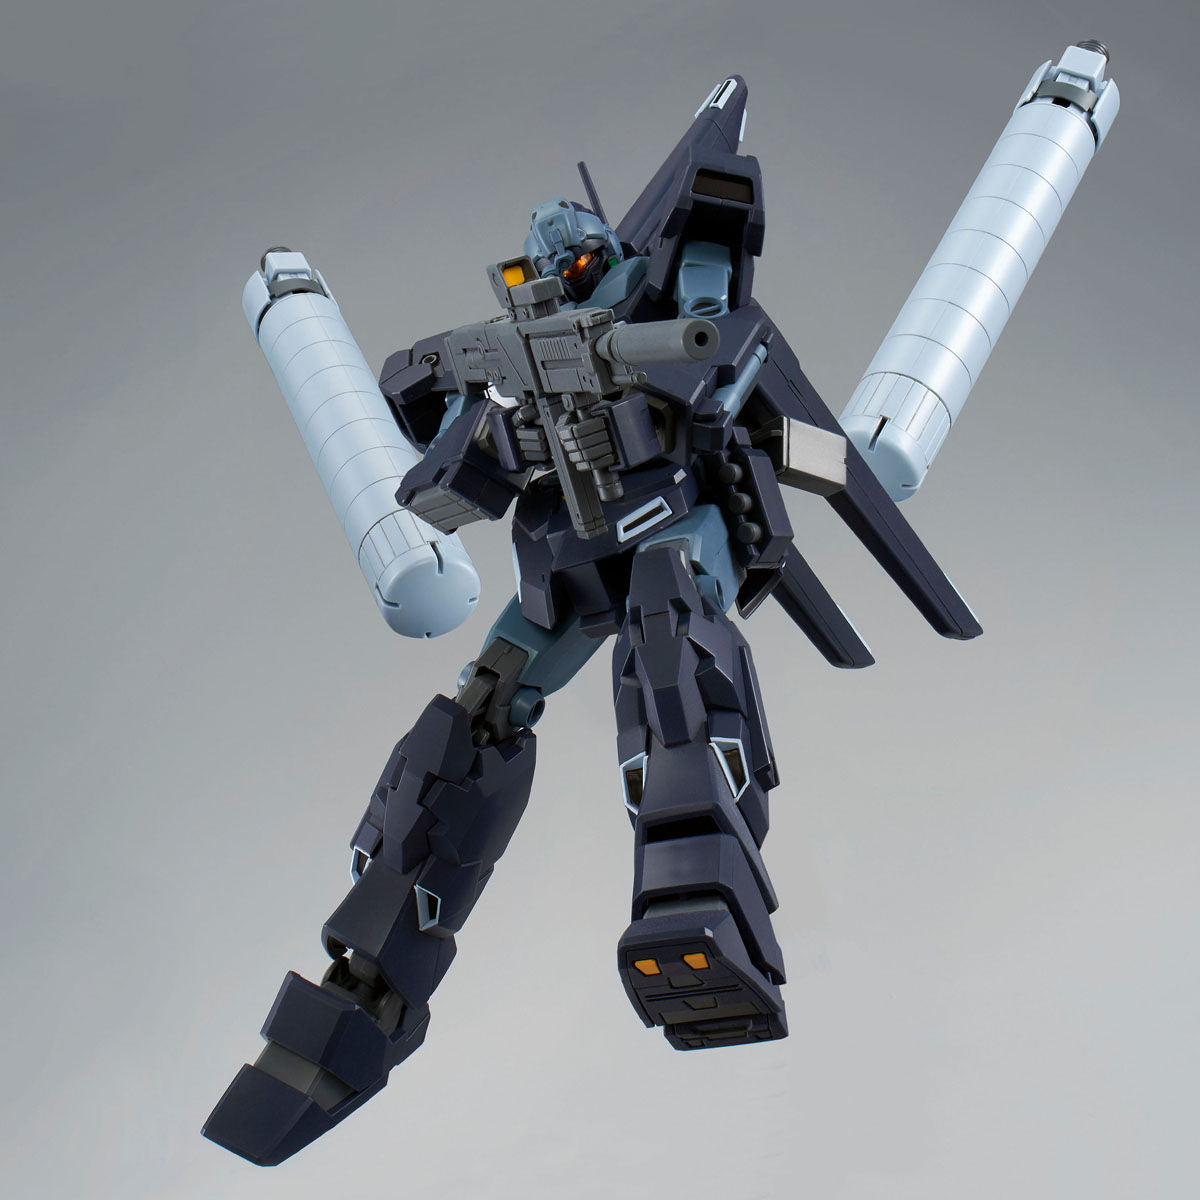 P-Bandai HG 1/144 Jesta Schezar team specification A group equipment Mobile Suit Gundam NT